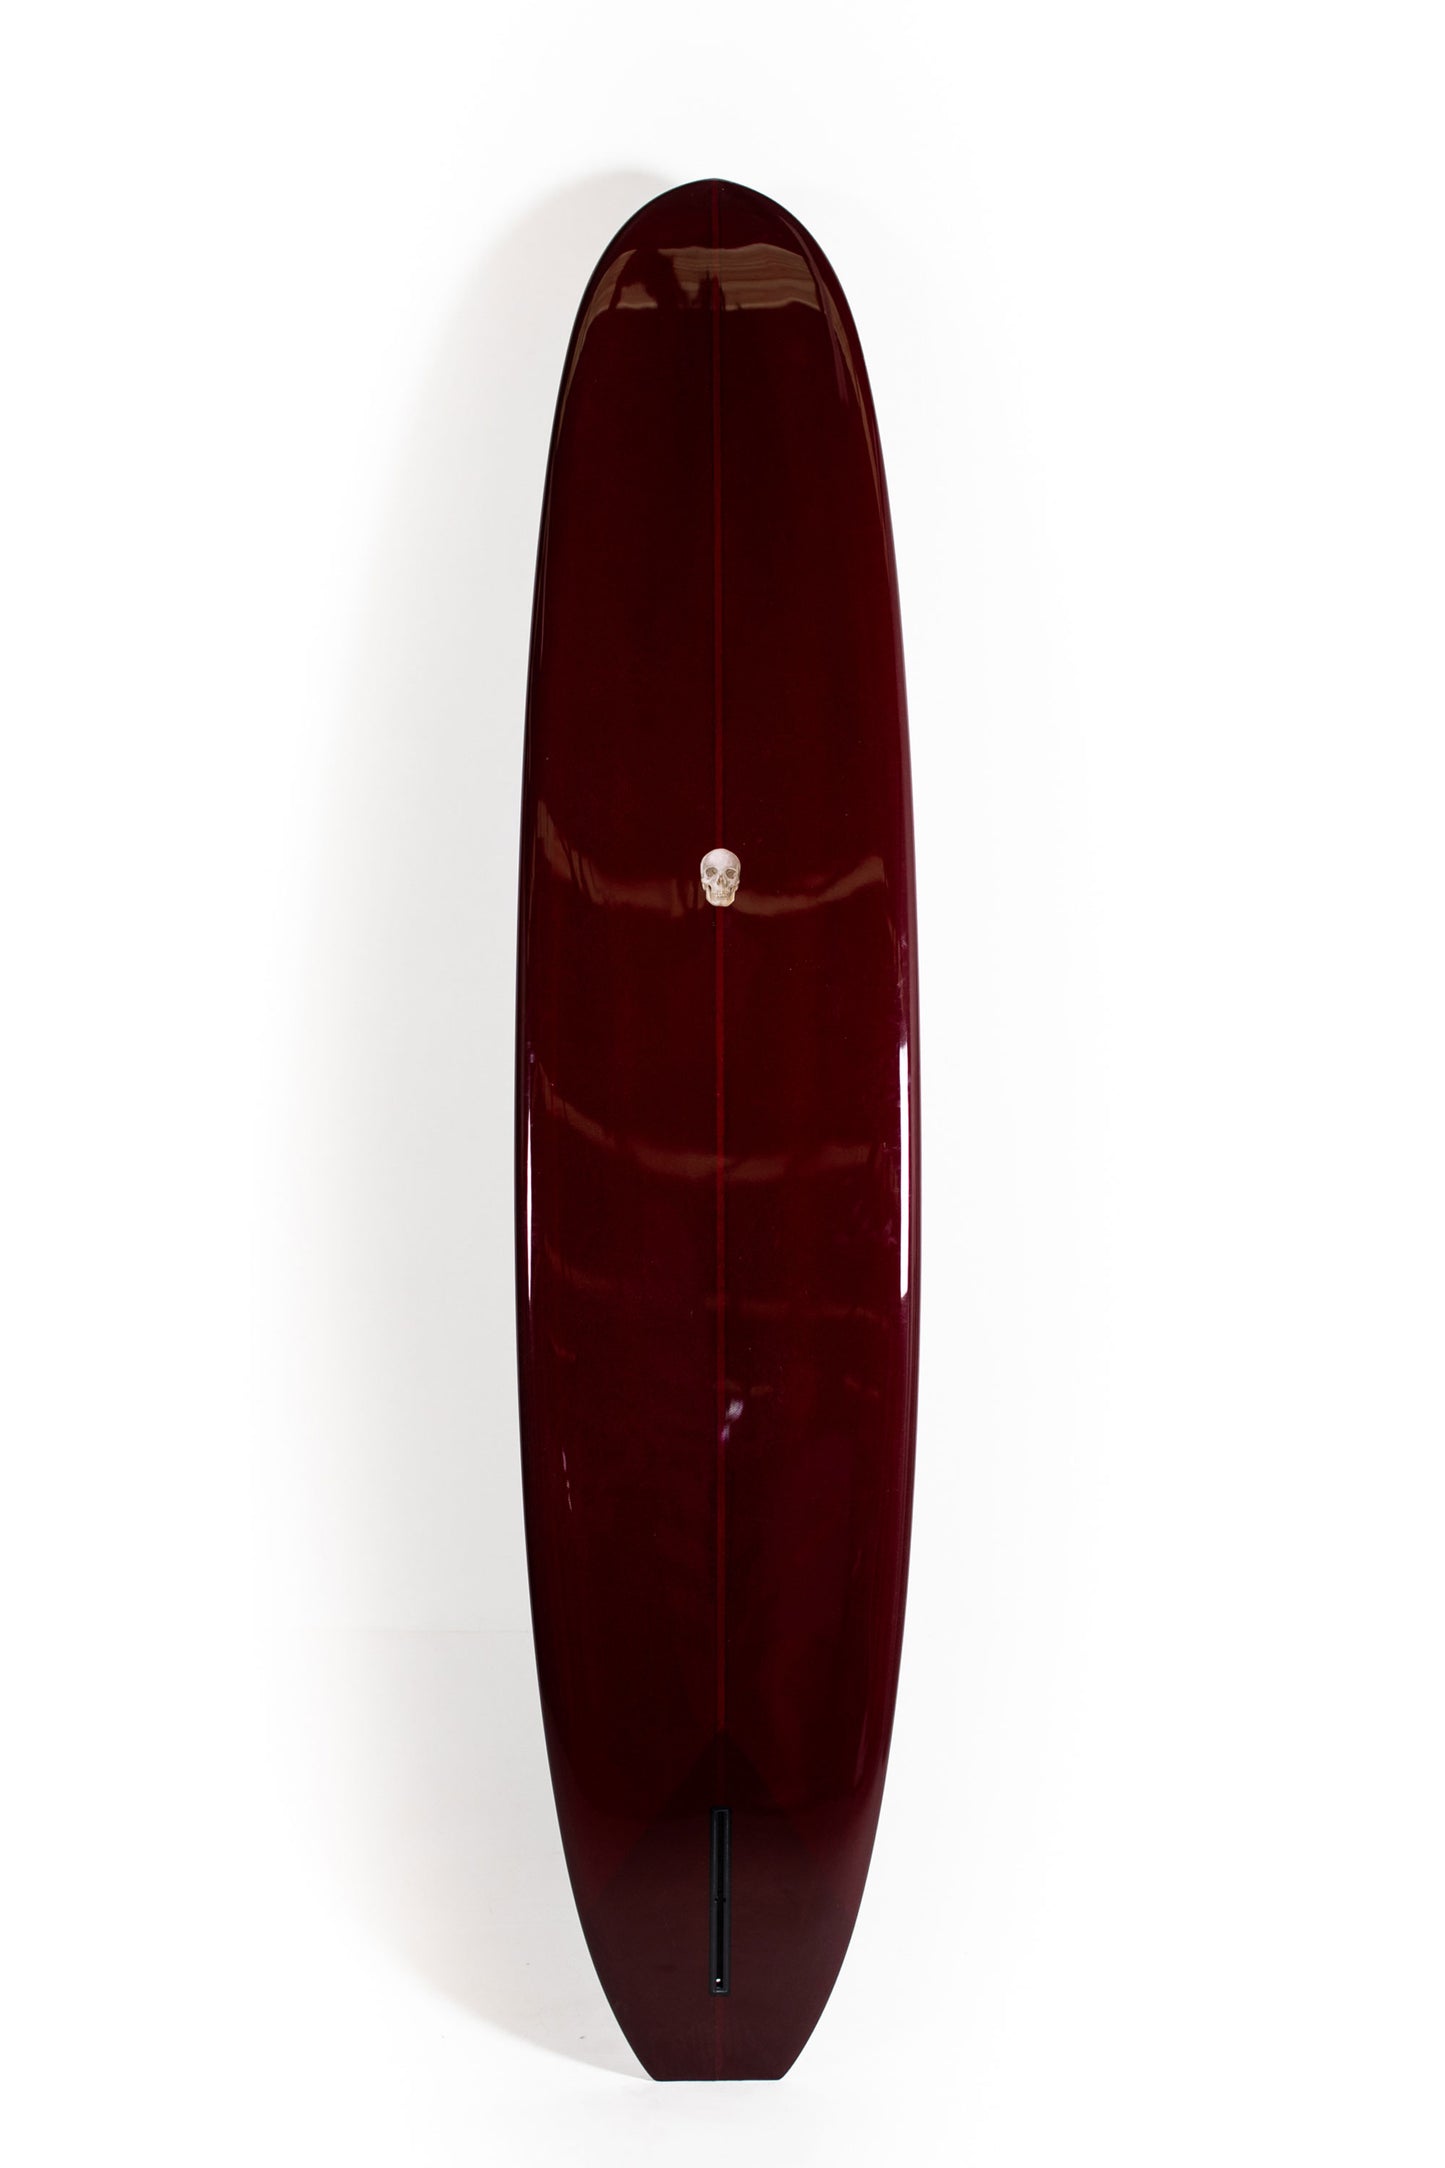 Pukas Surf Shop - Christenson Surfboard  - SCARLET BEGONIA by Chris Christenson - 9'3” x 23" x 2 13/16" - CX05366